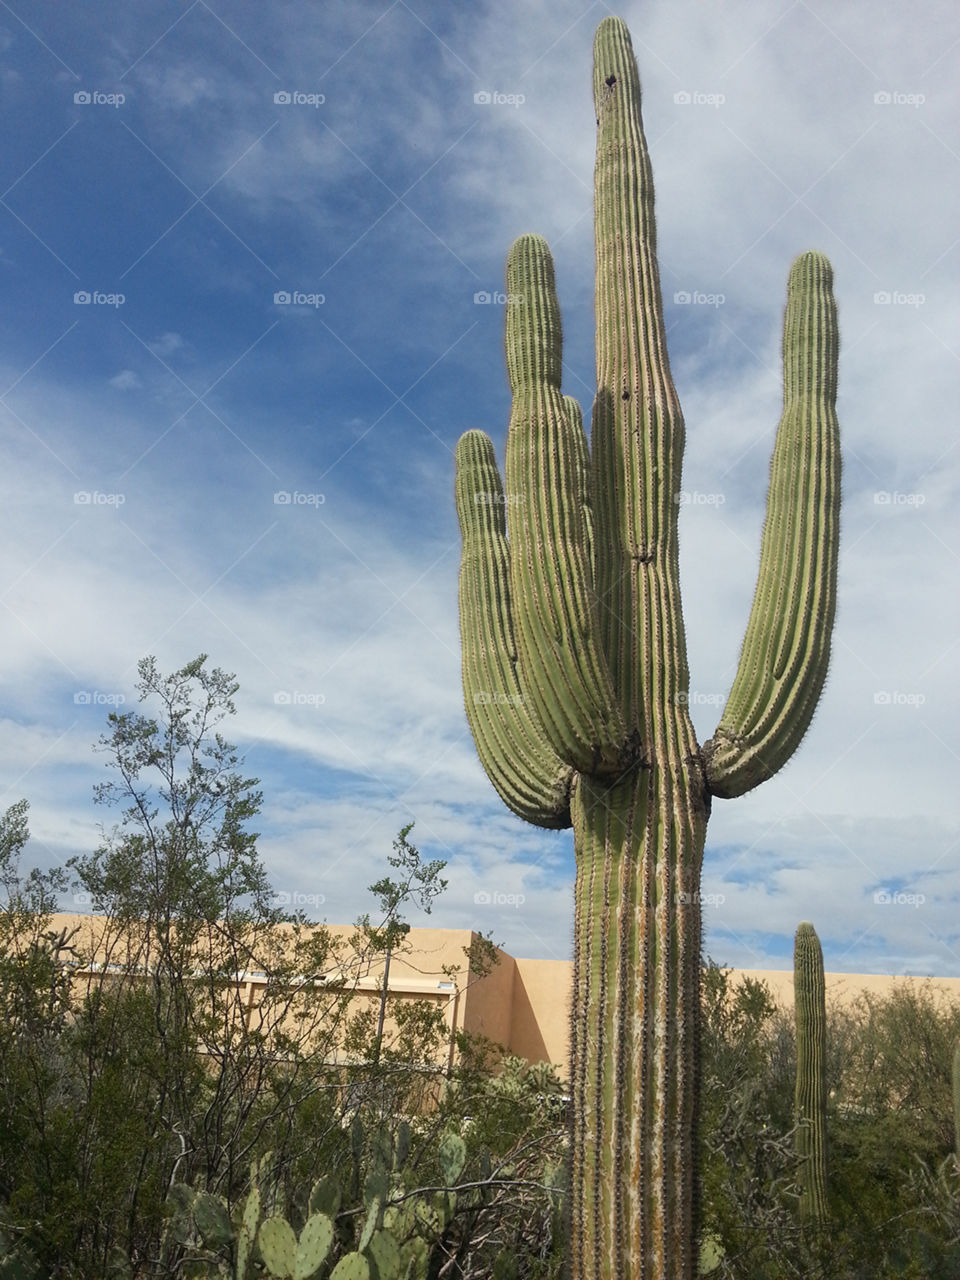 Cactus - Arizona